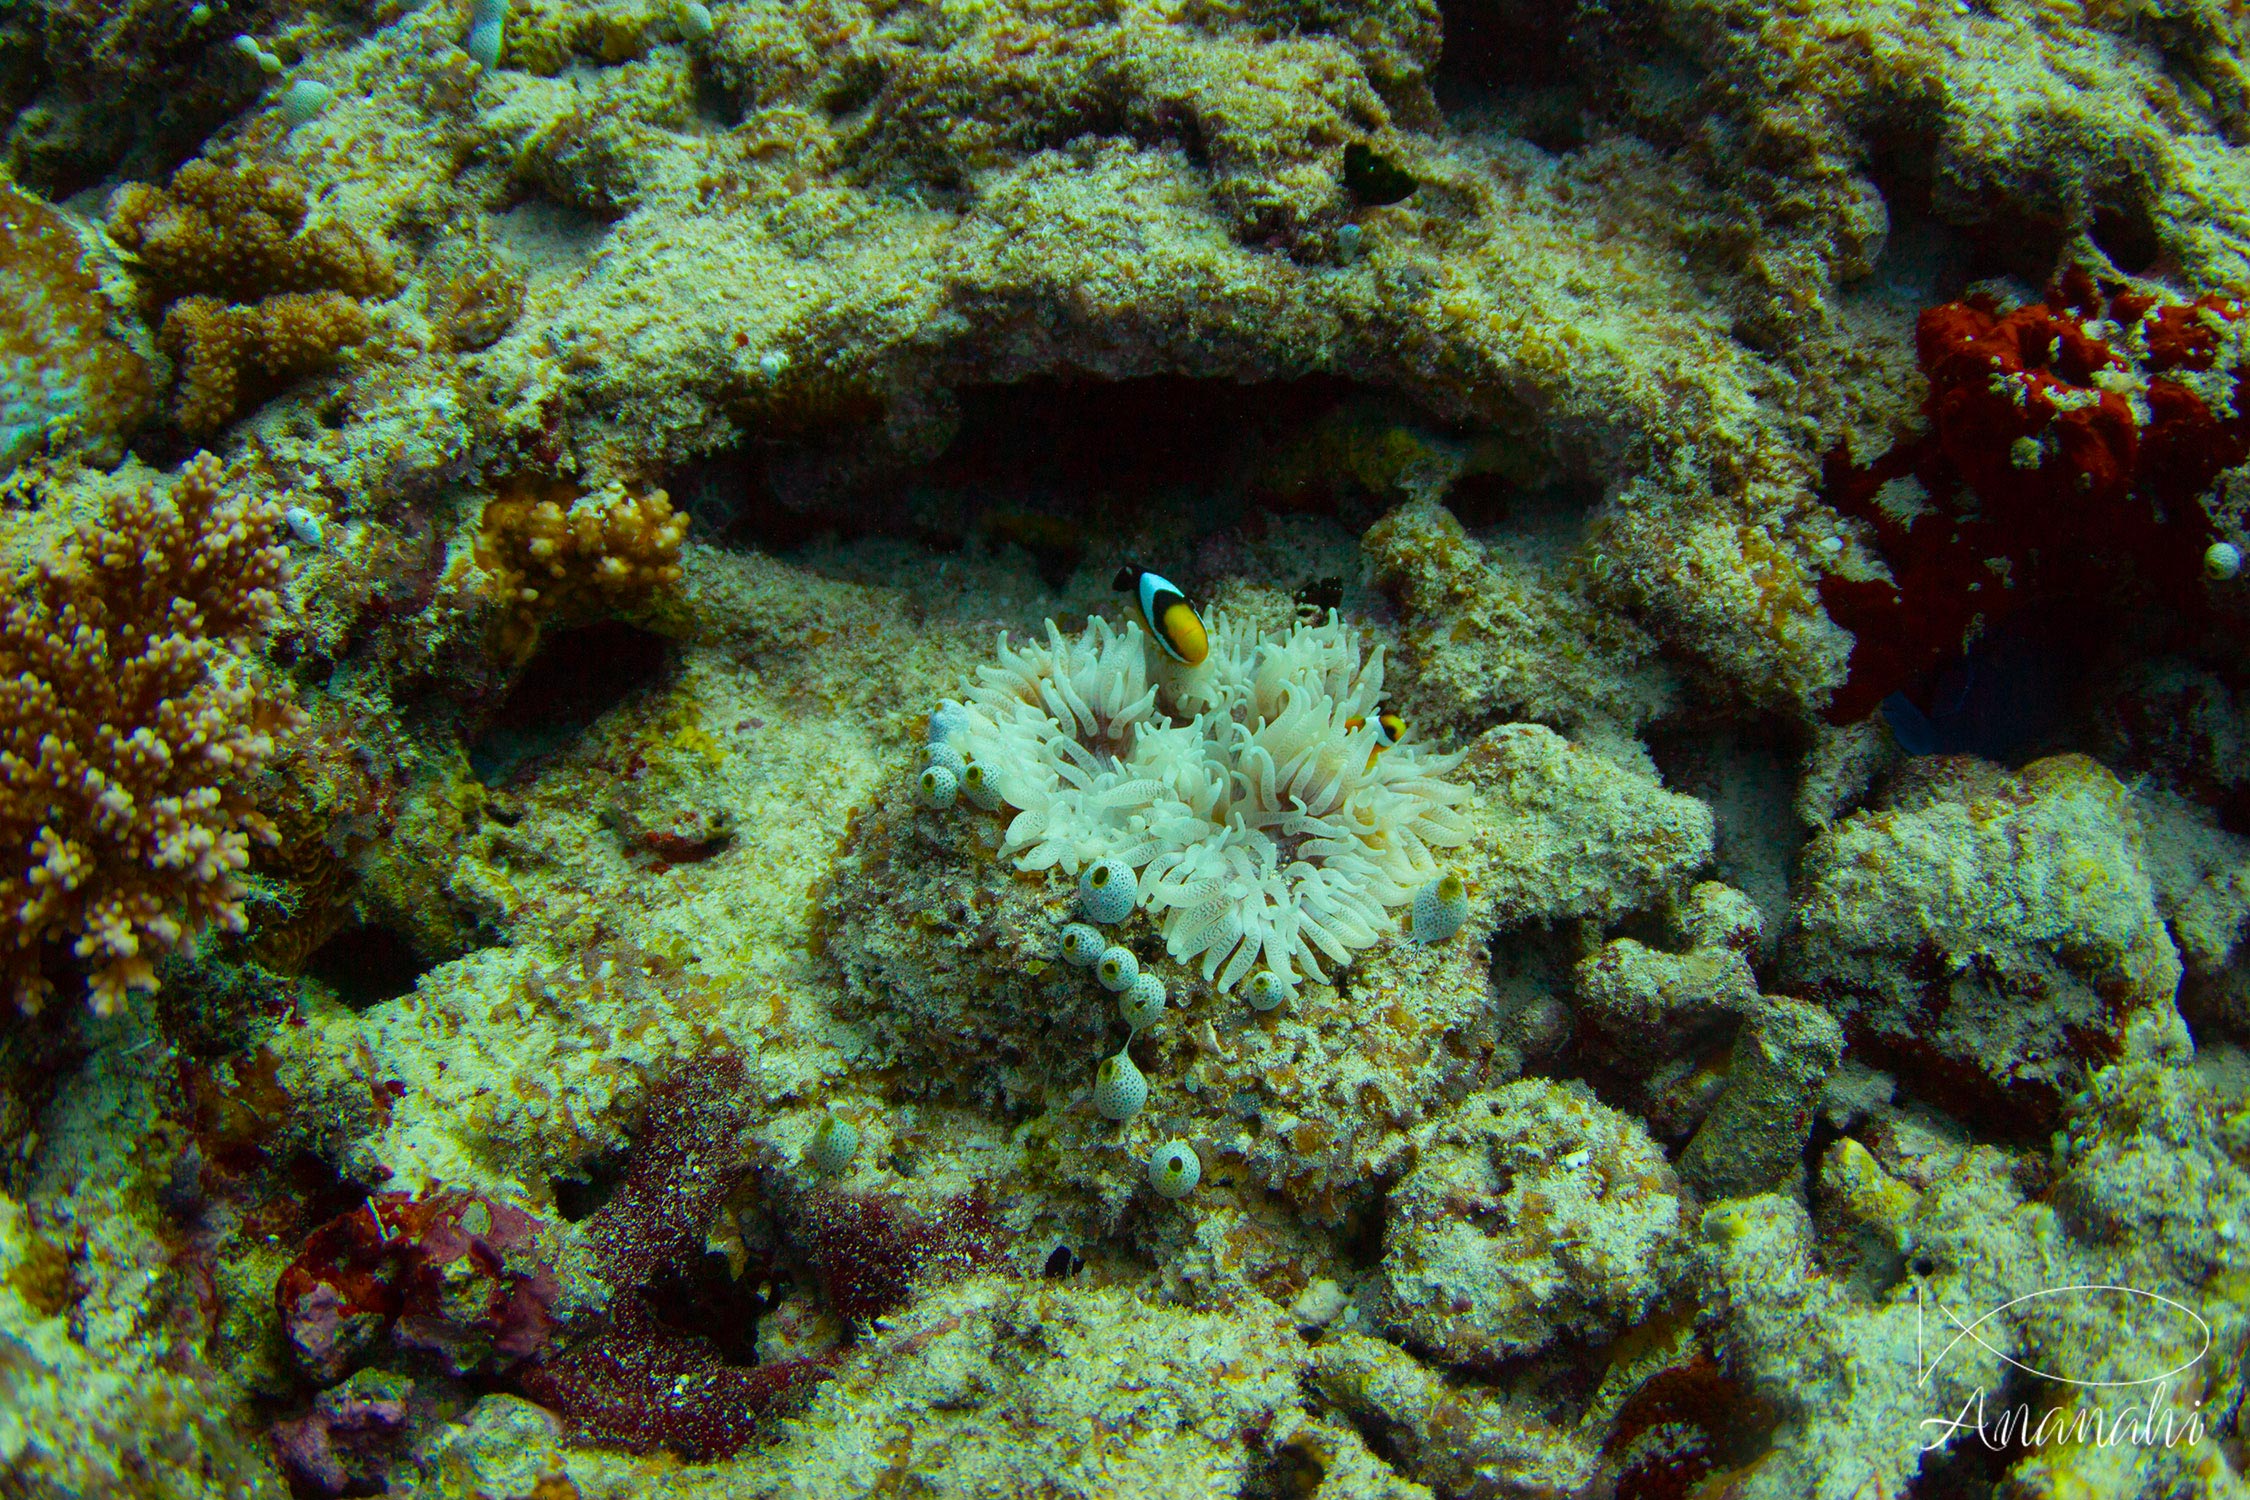 Leathery sea anemone of Maldives